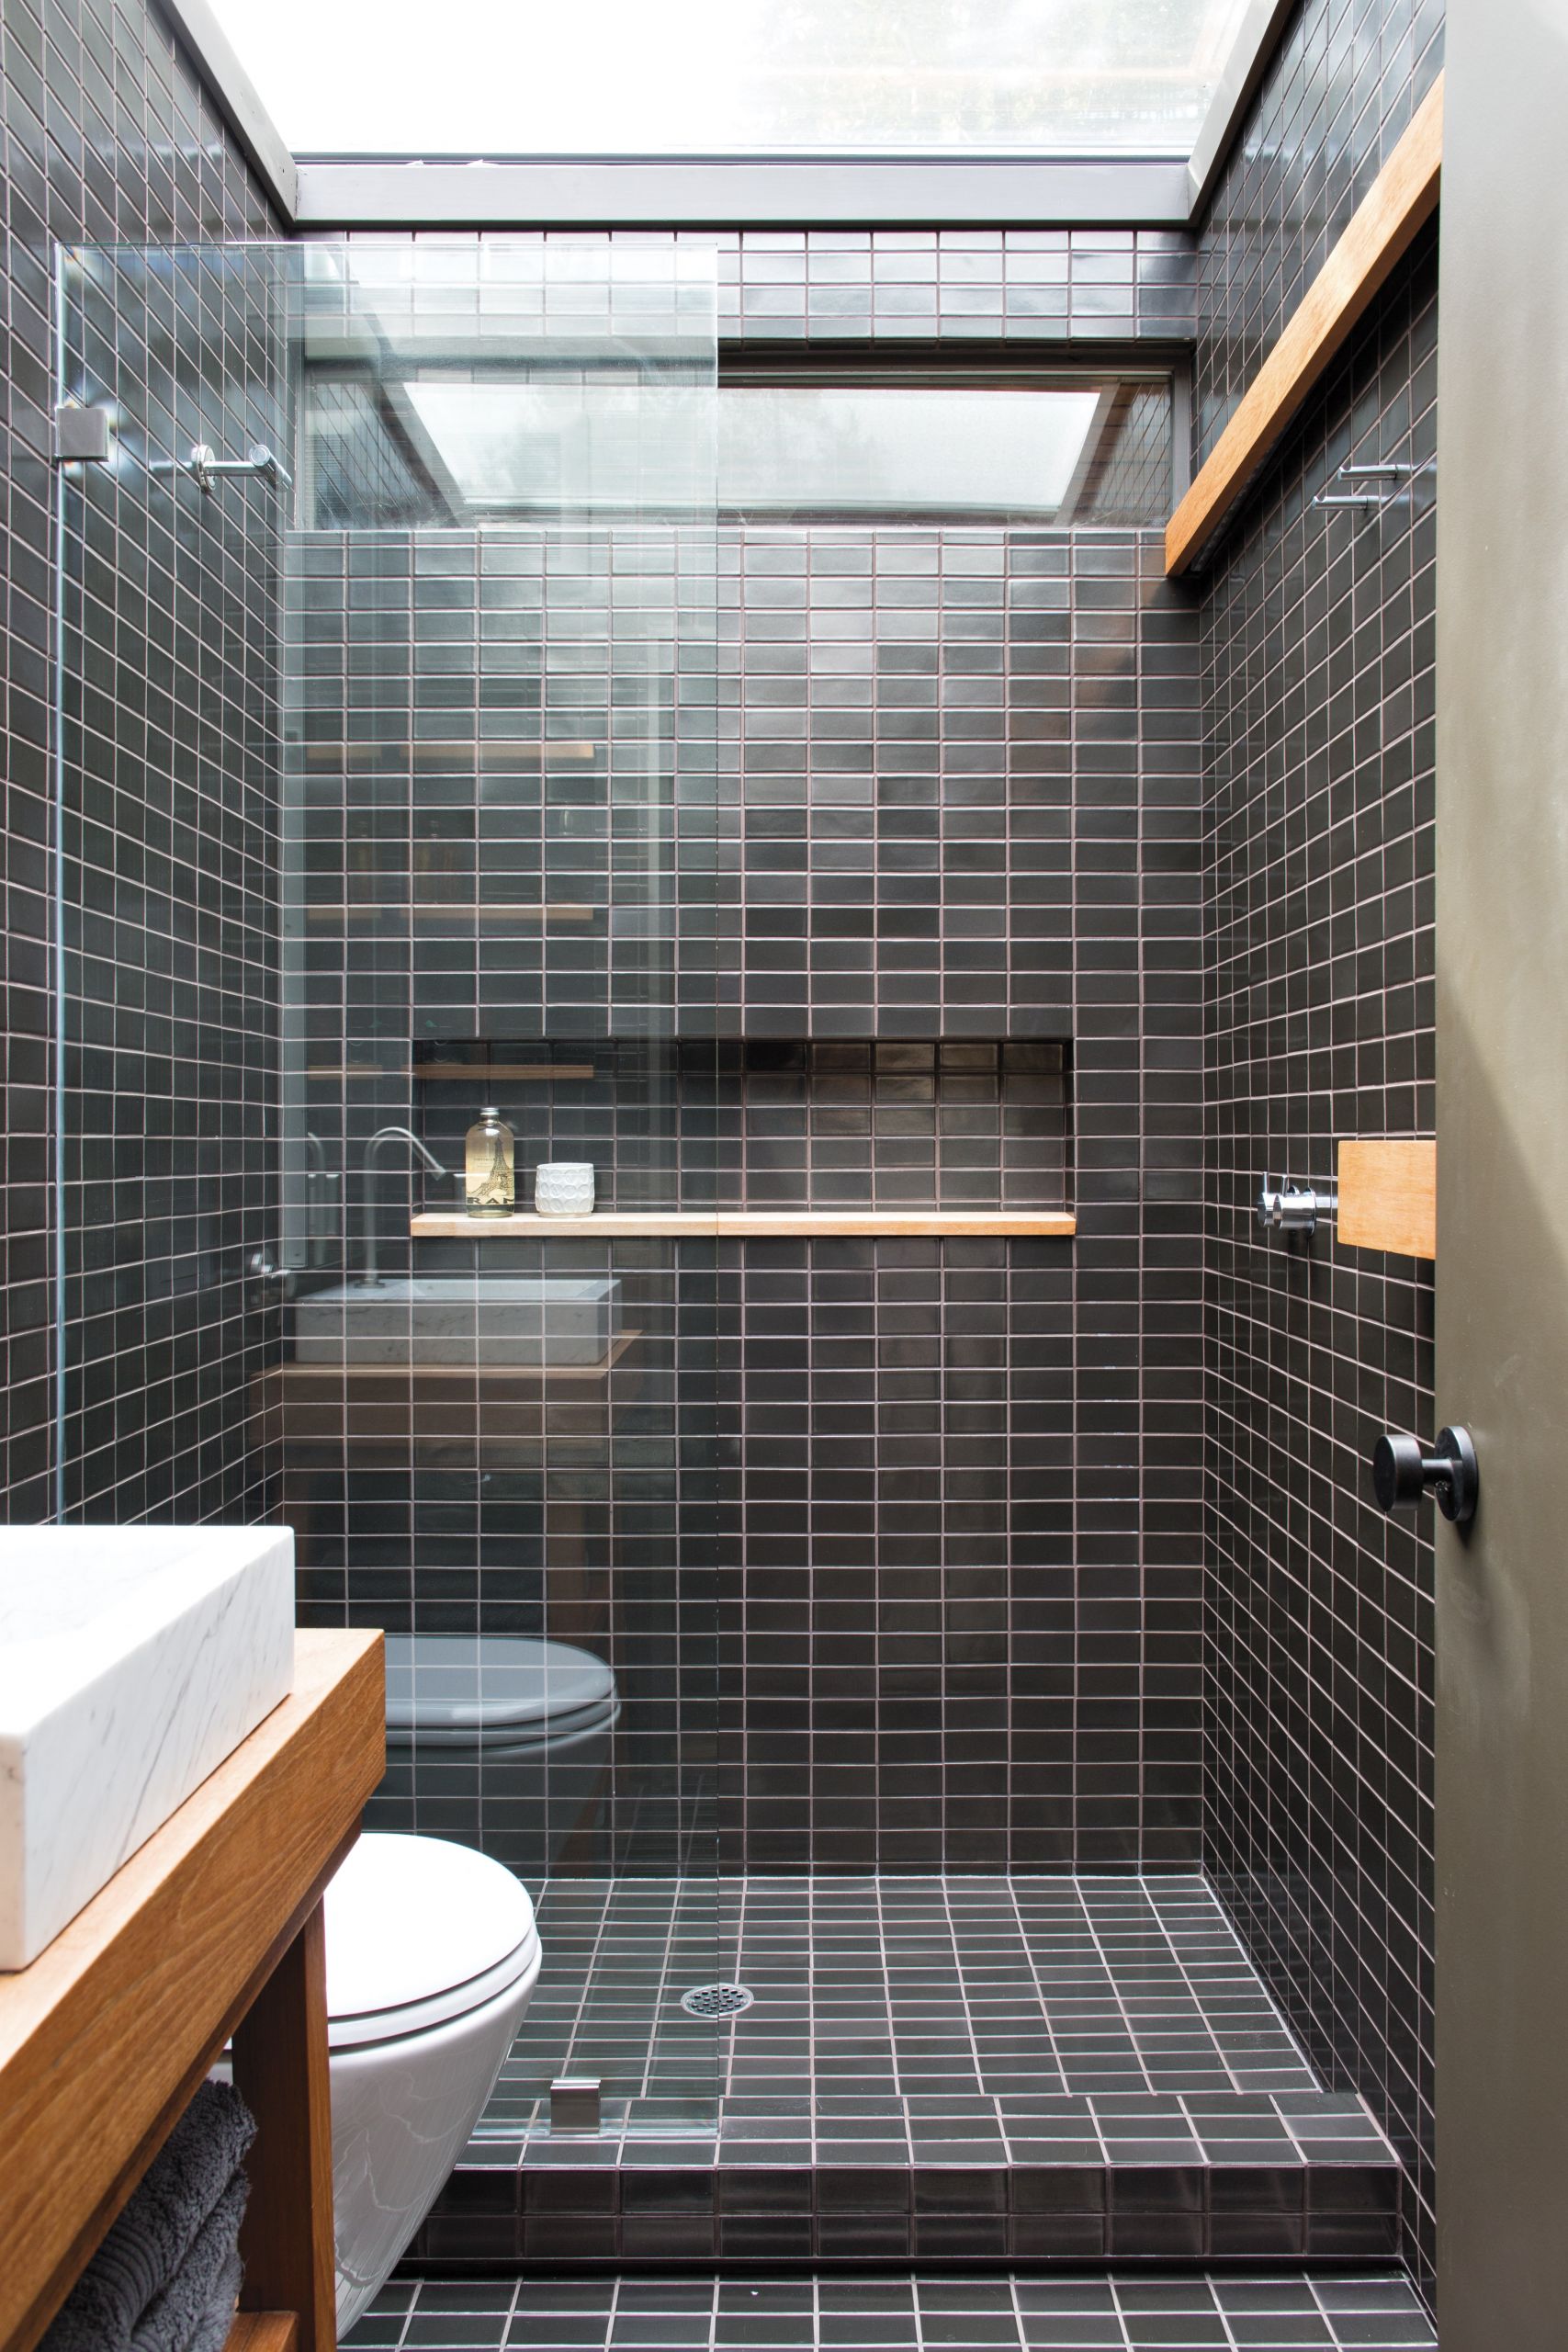 Bathroom Tile Decor
 How to Create the Bathroom Tile Design of Your Dreams